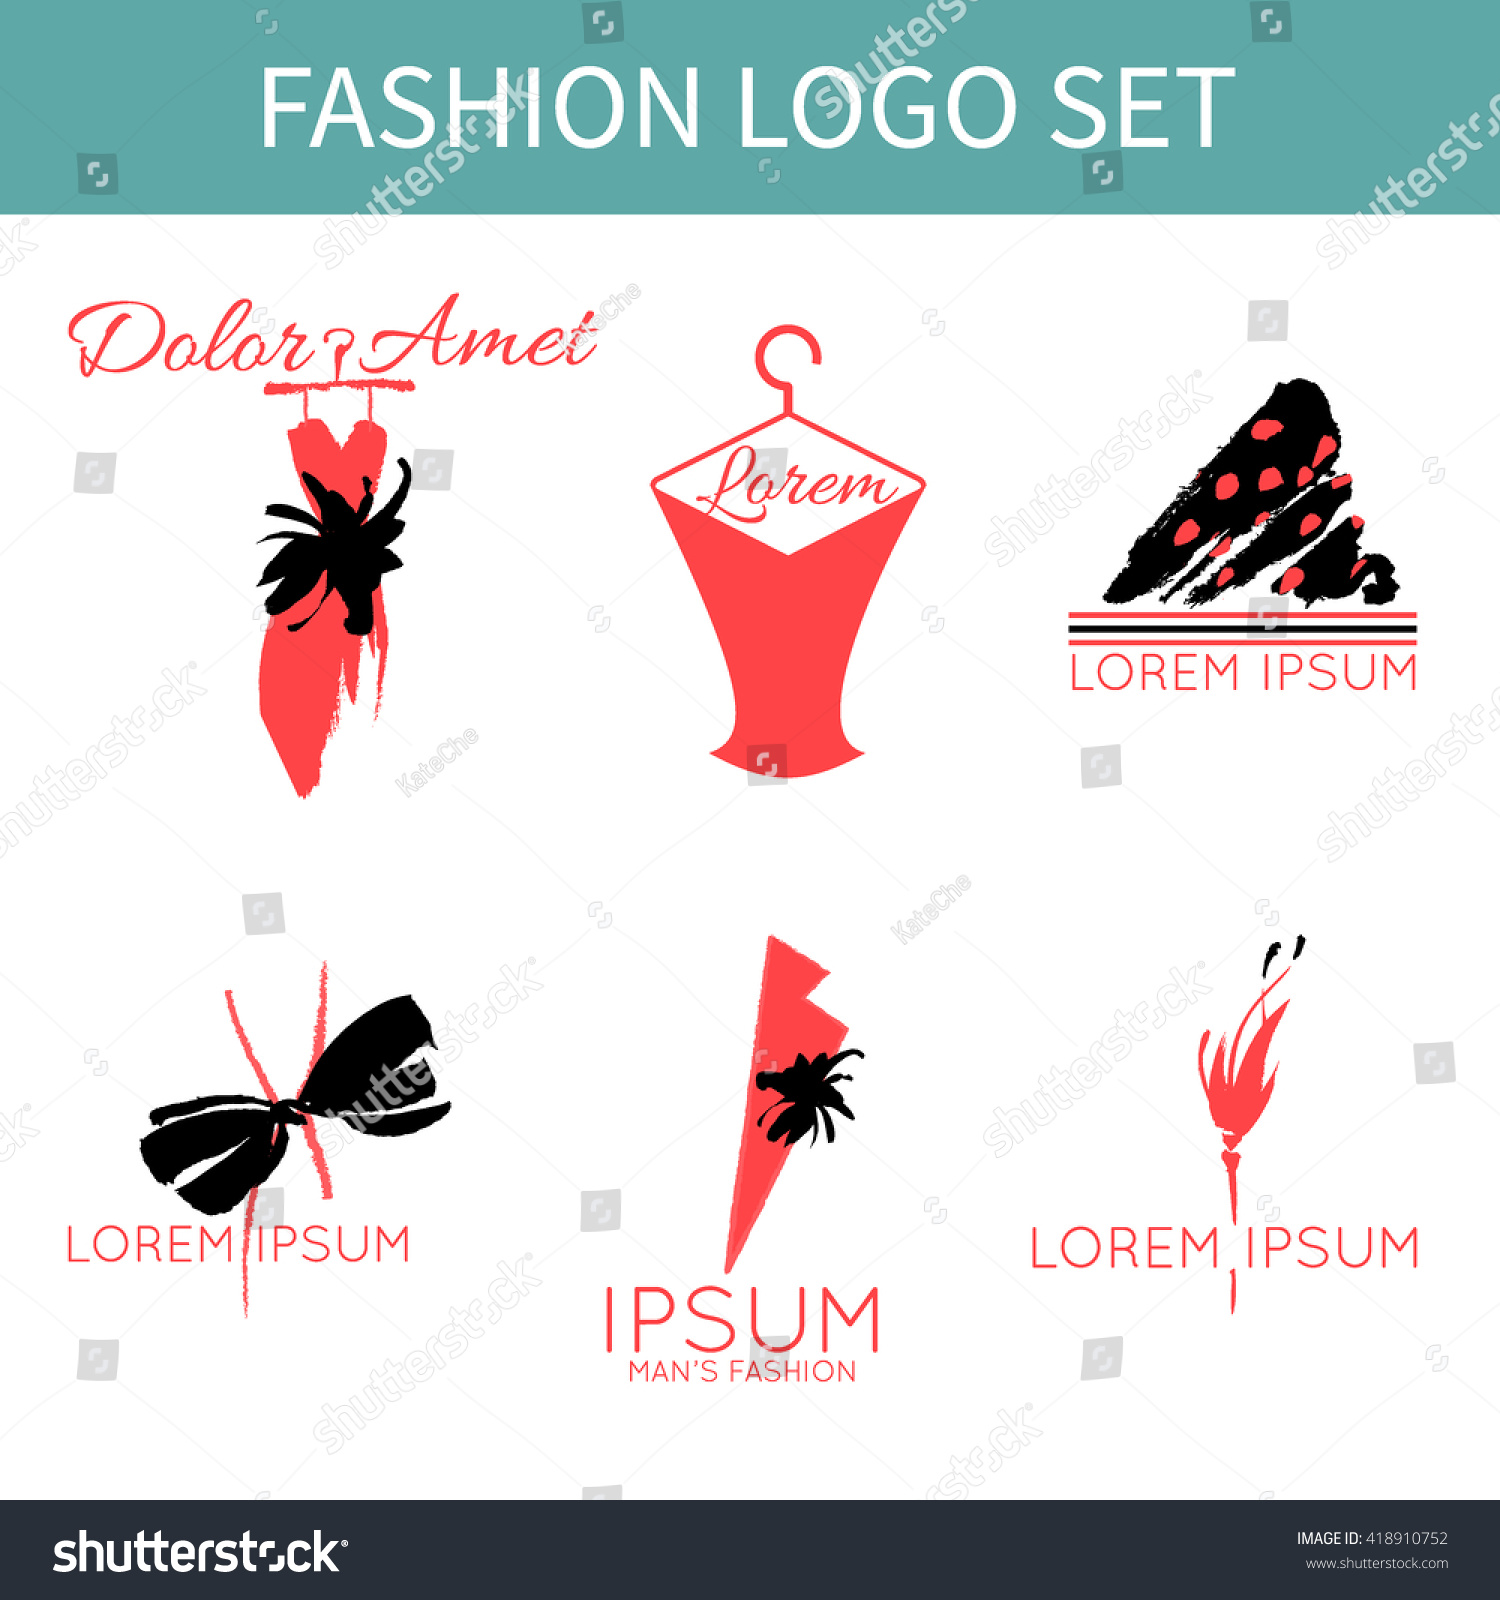 Set Of Fashion Logo Designs For Clothing Shop, Salon, Stylist, Shopper ...